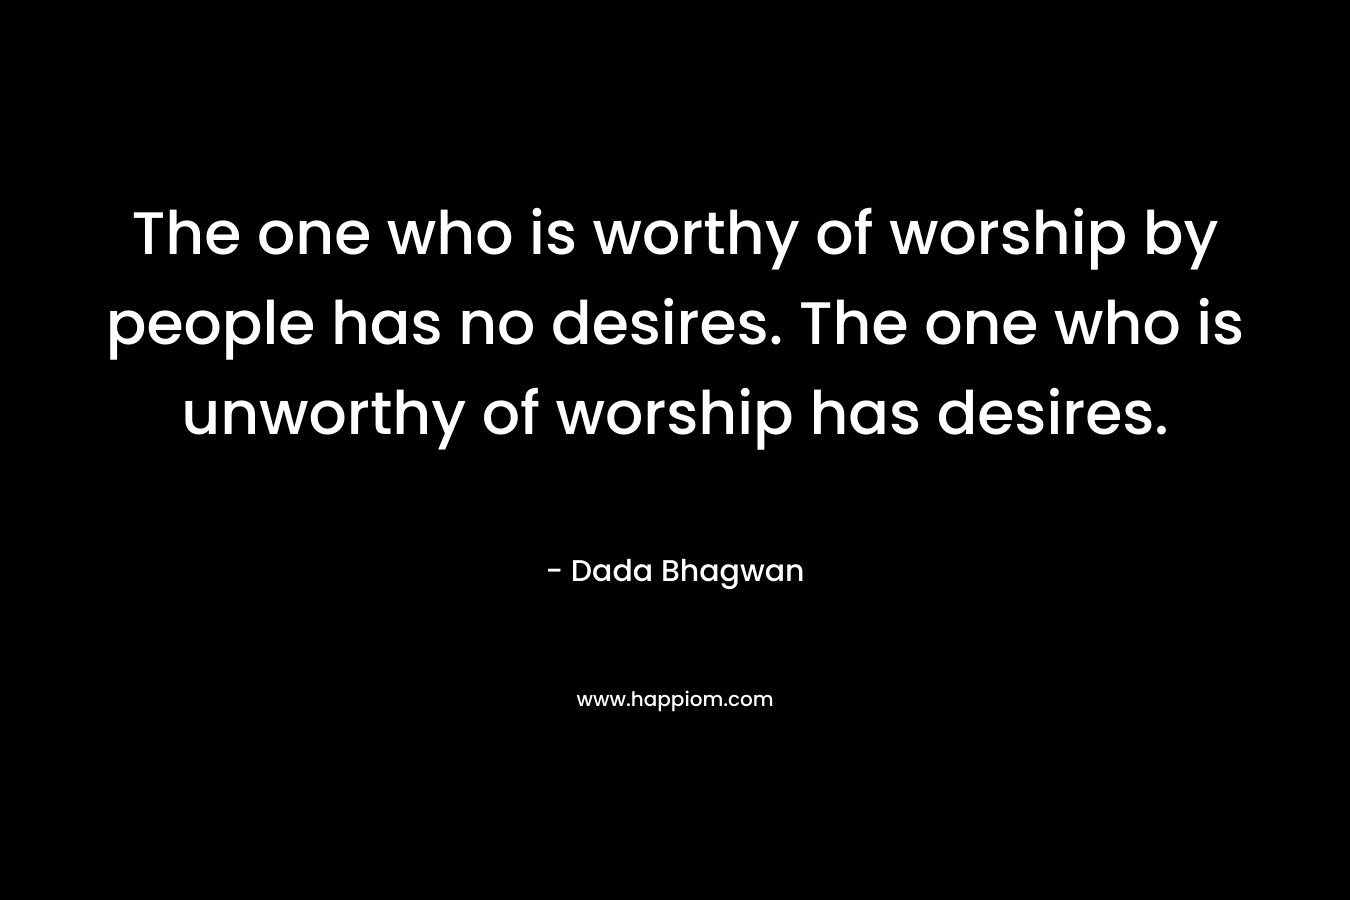 The one who is worthy of worship by people has no desires. The one who is unworthy of worship has desires. – Dada Bhagwan